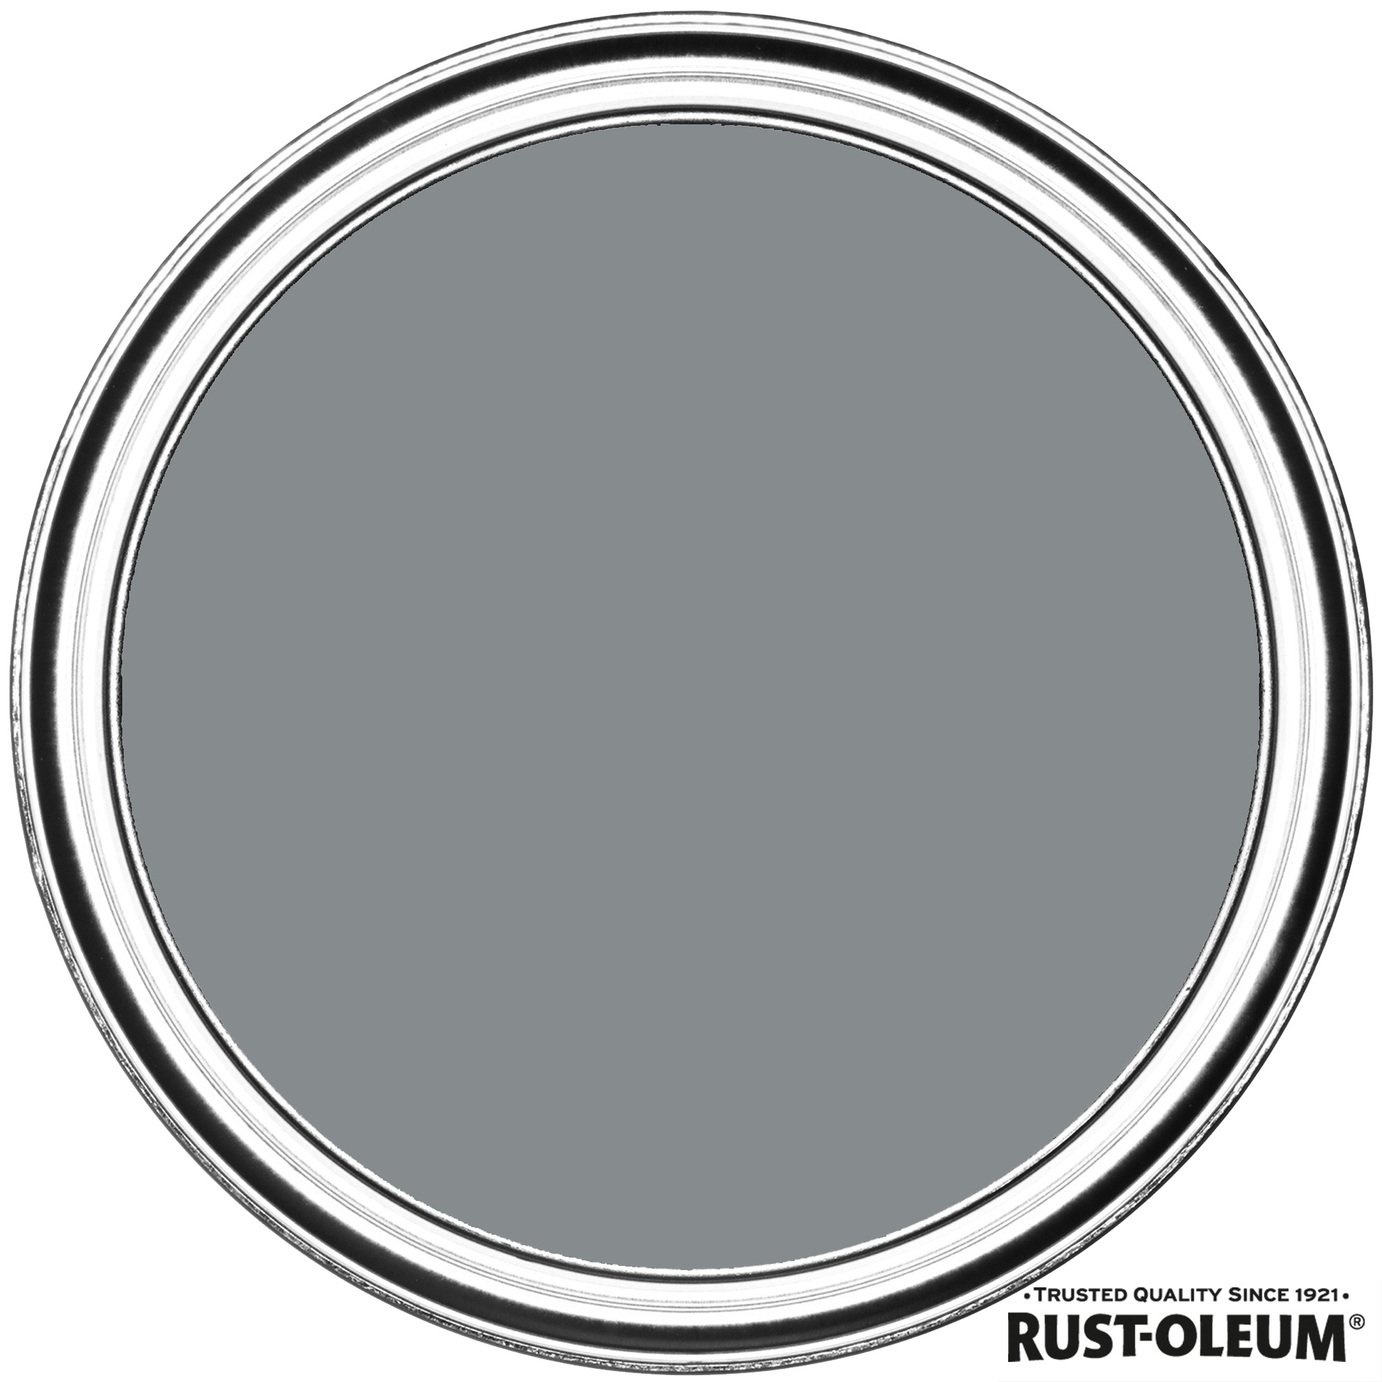 Rust-Oleum Satin Furniture Paint 750ml Review